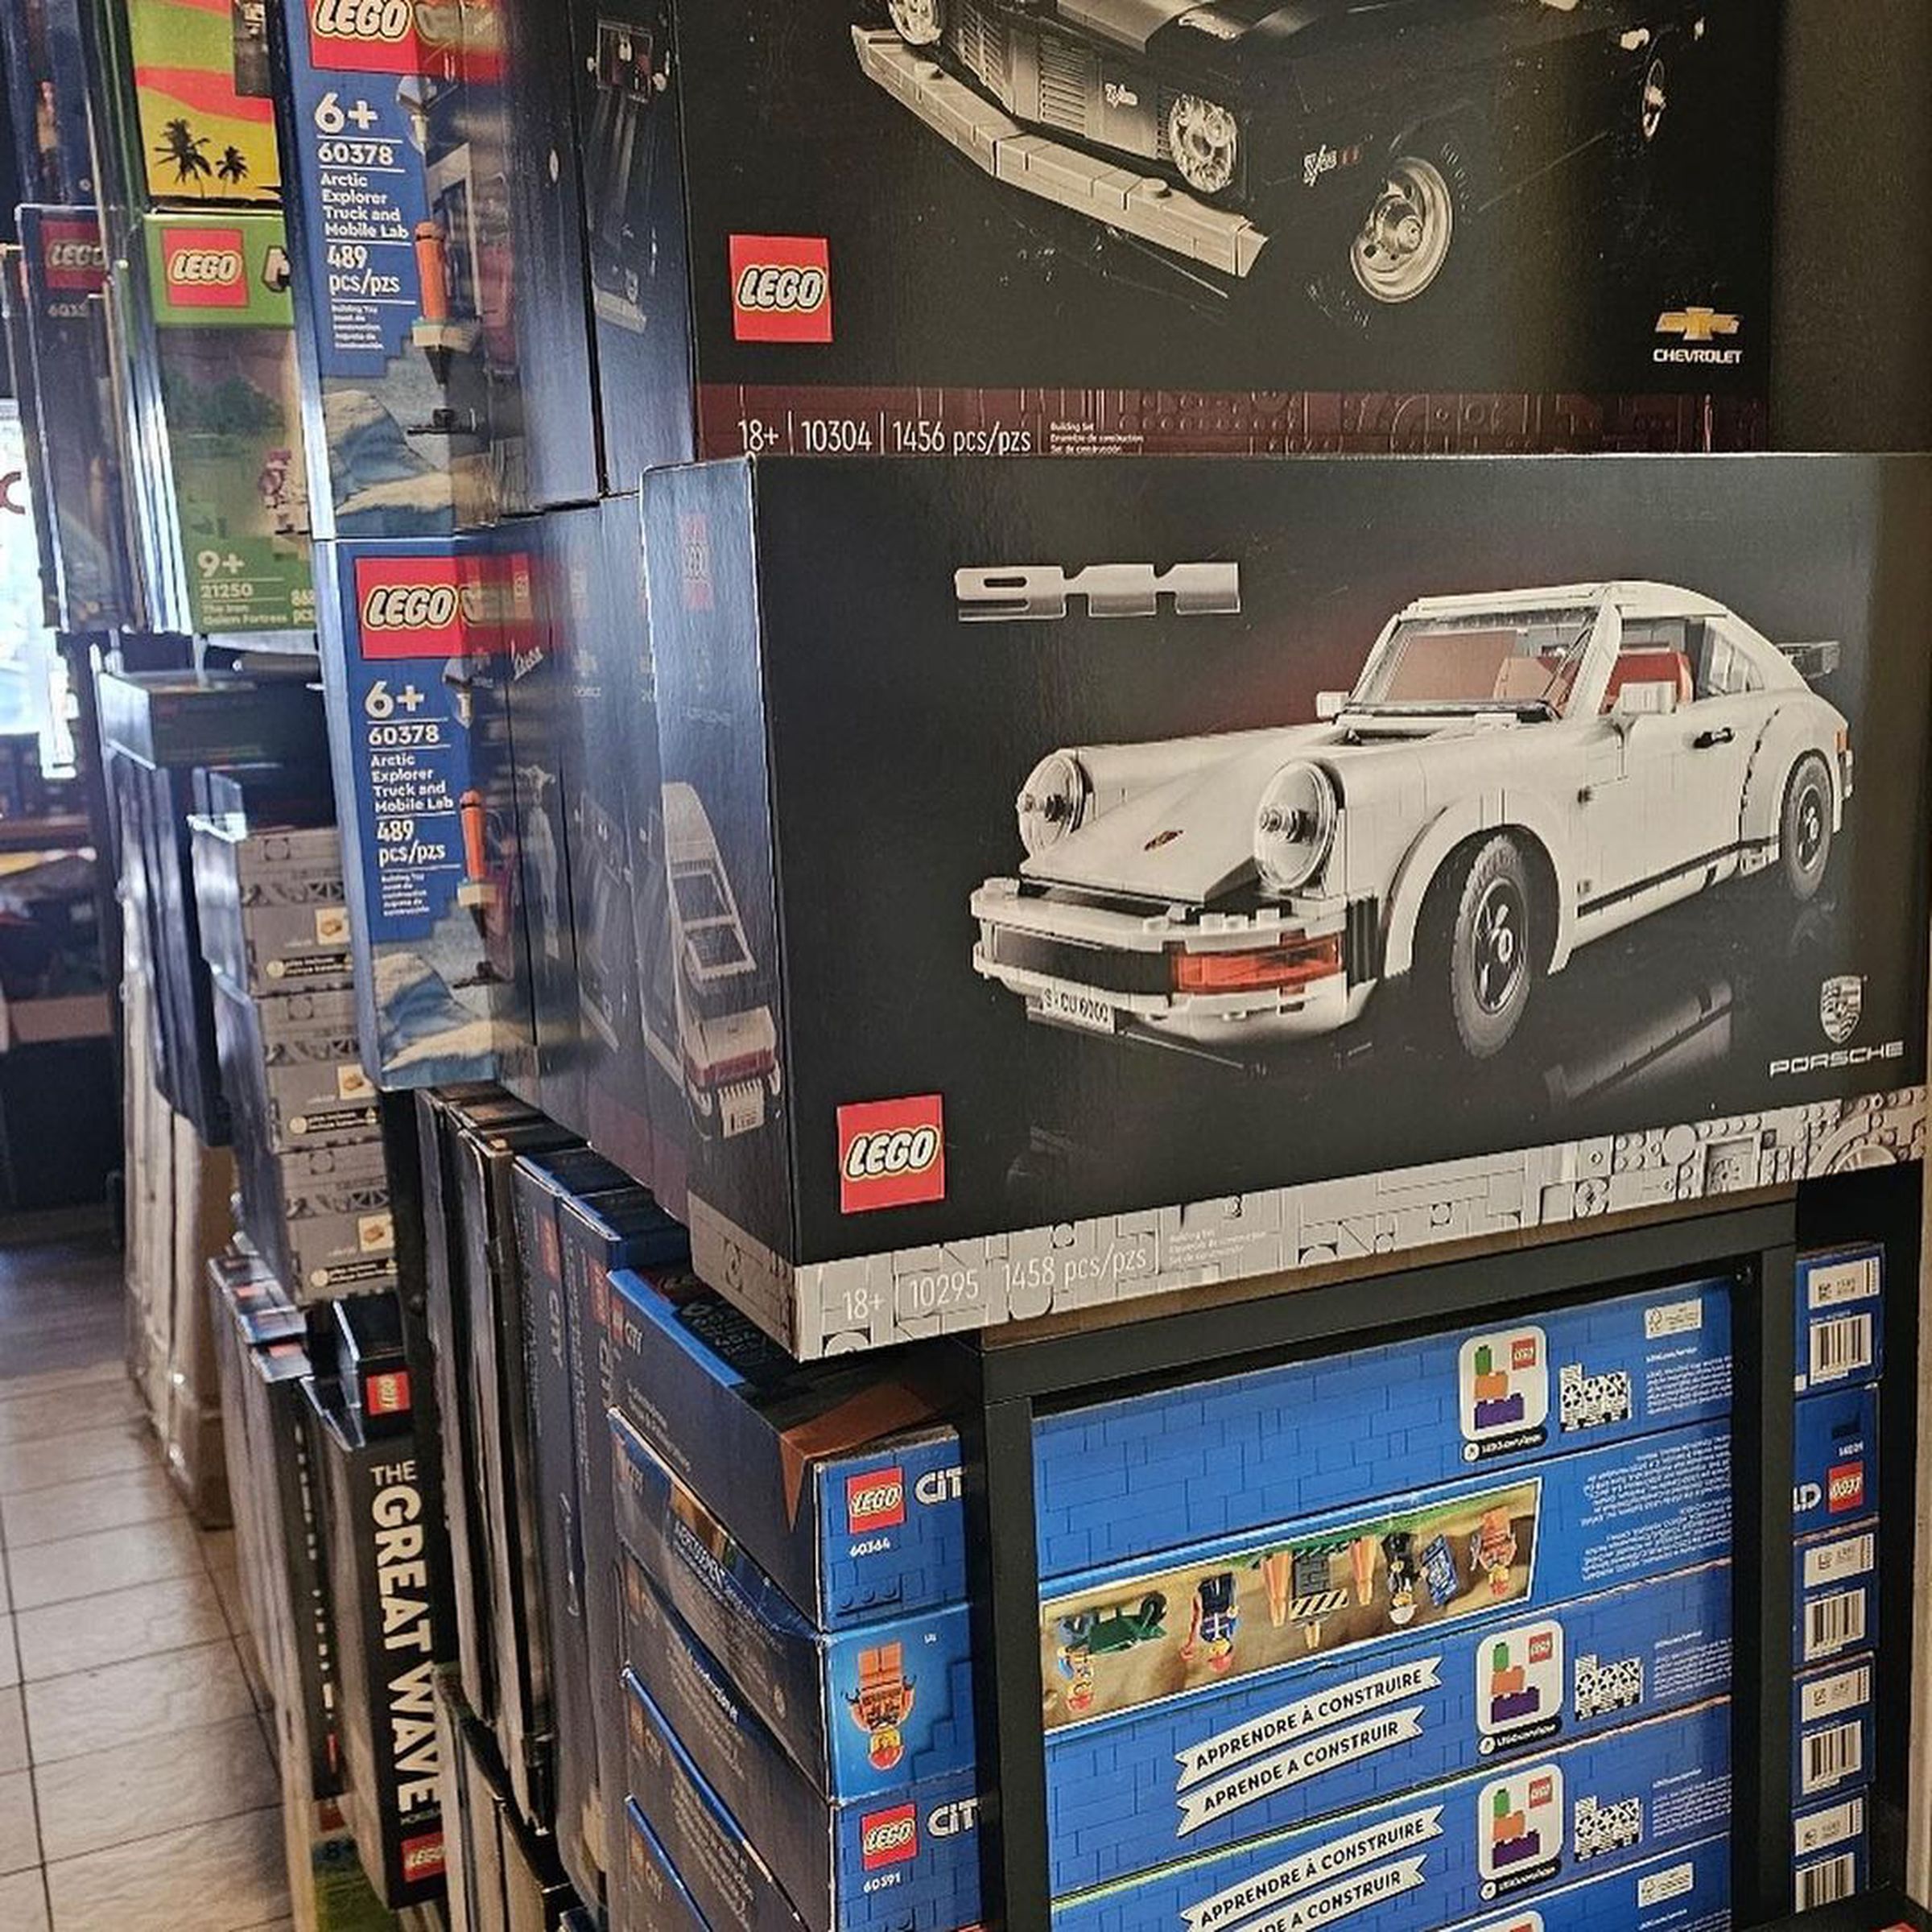 A picture of a Porsche 911 Lego set.